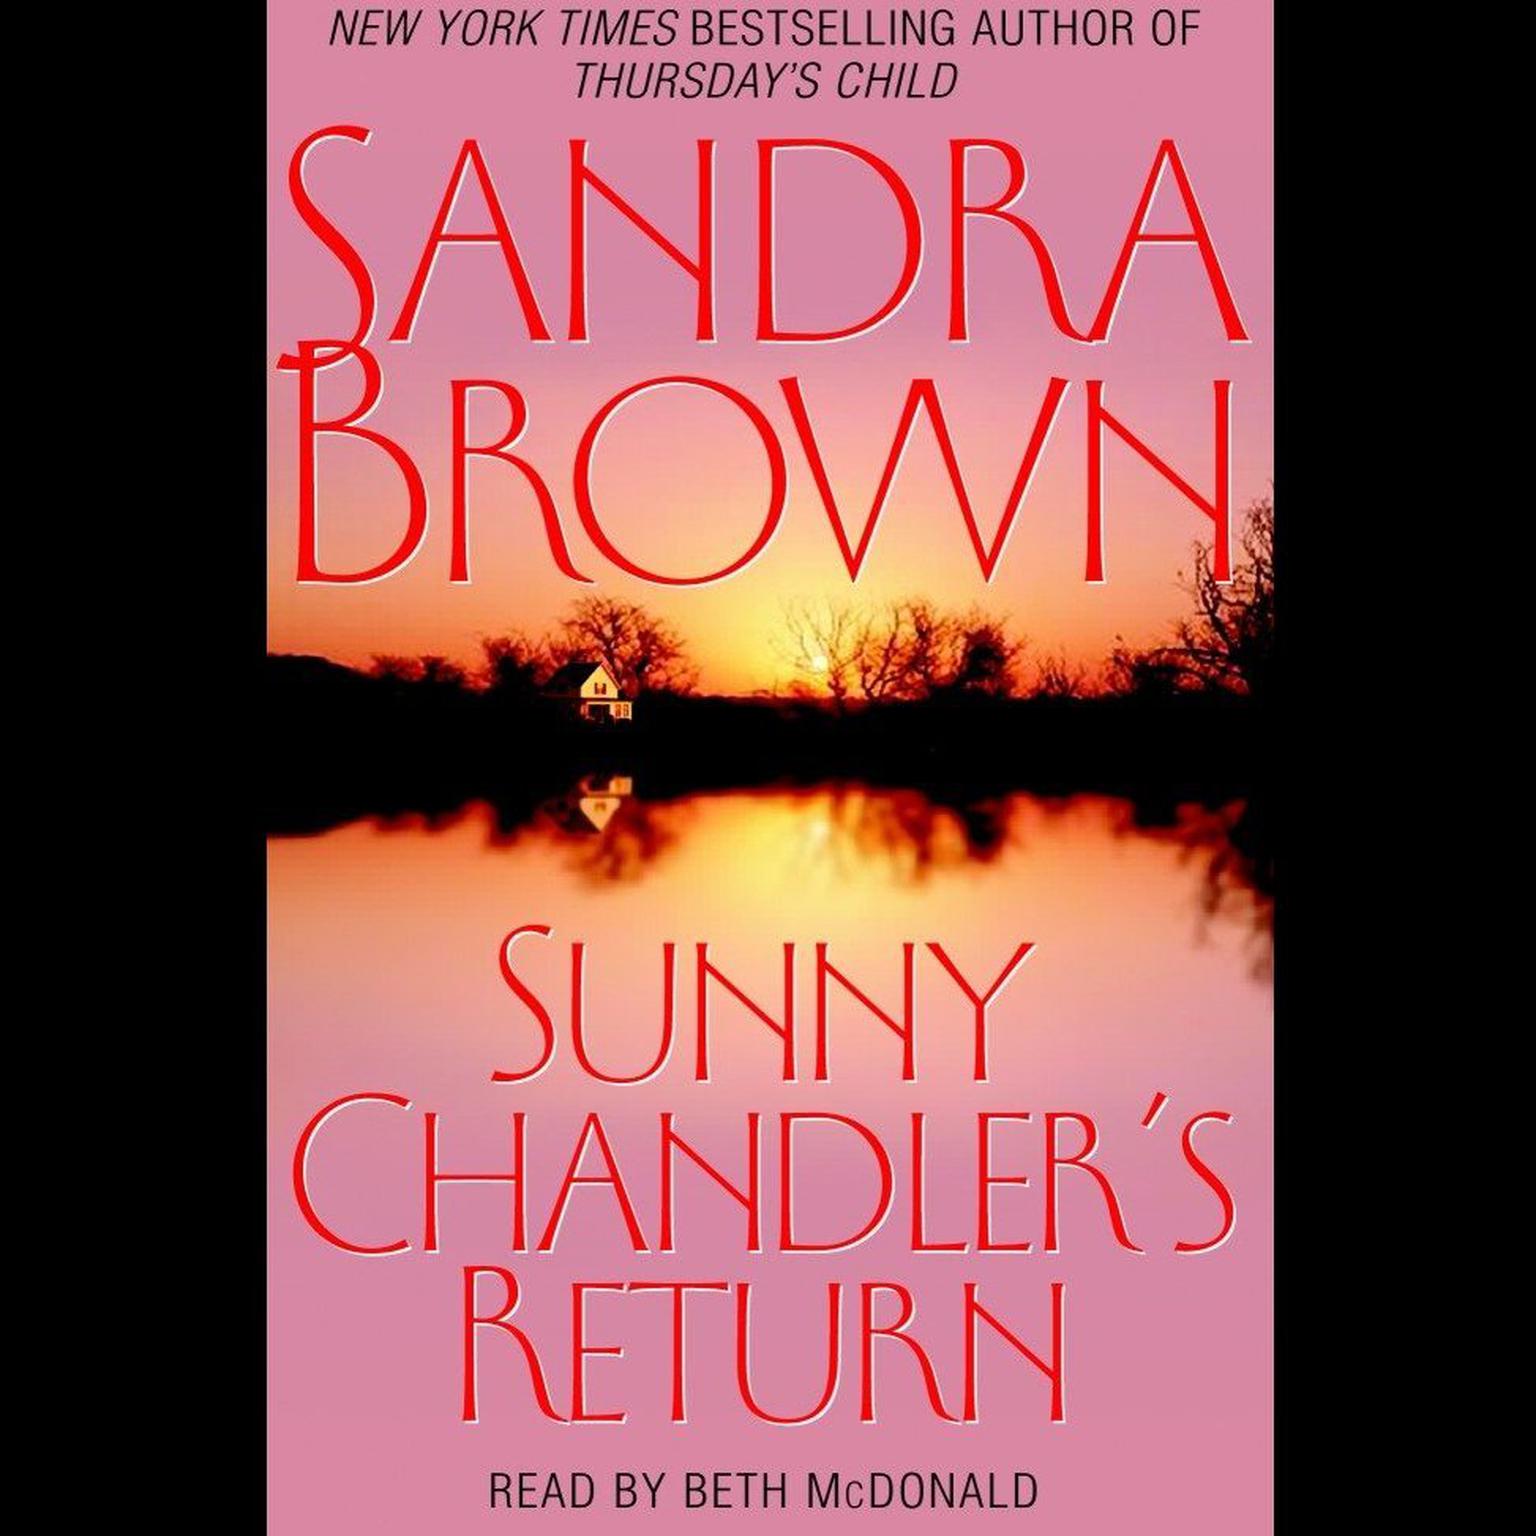 Sunny Chandlers Return: A Novel Audiobook, by Sandra Brown